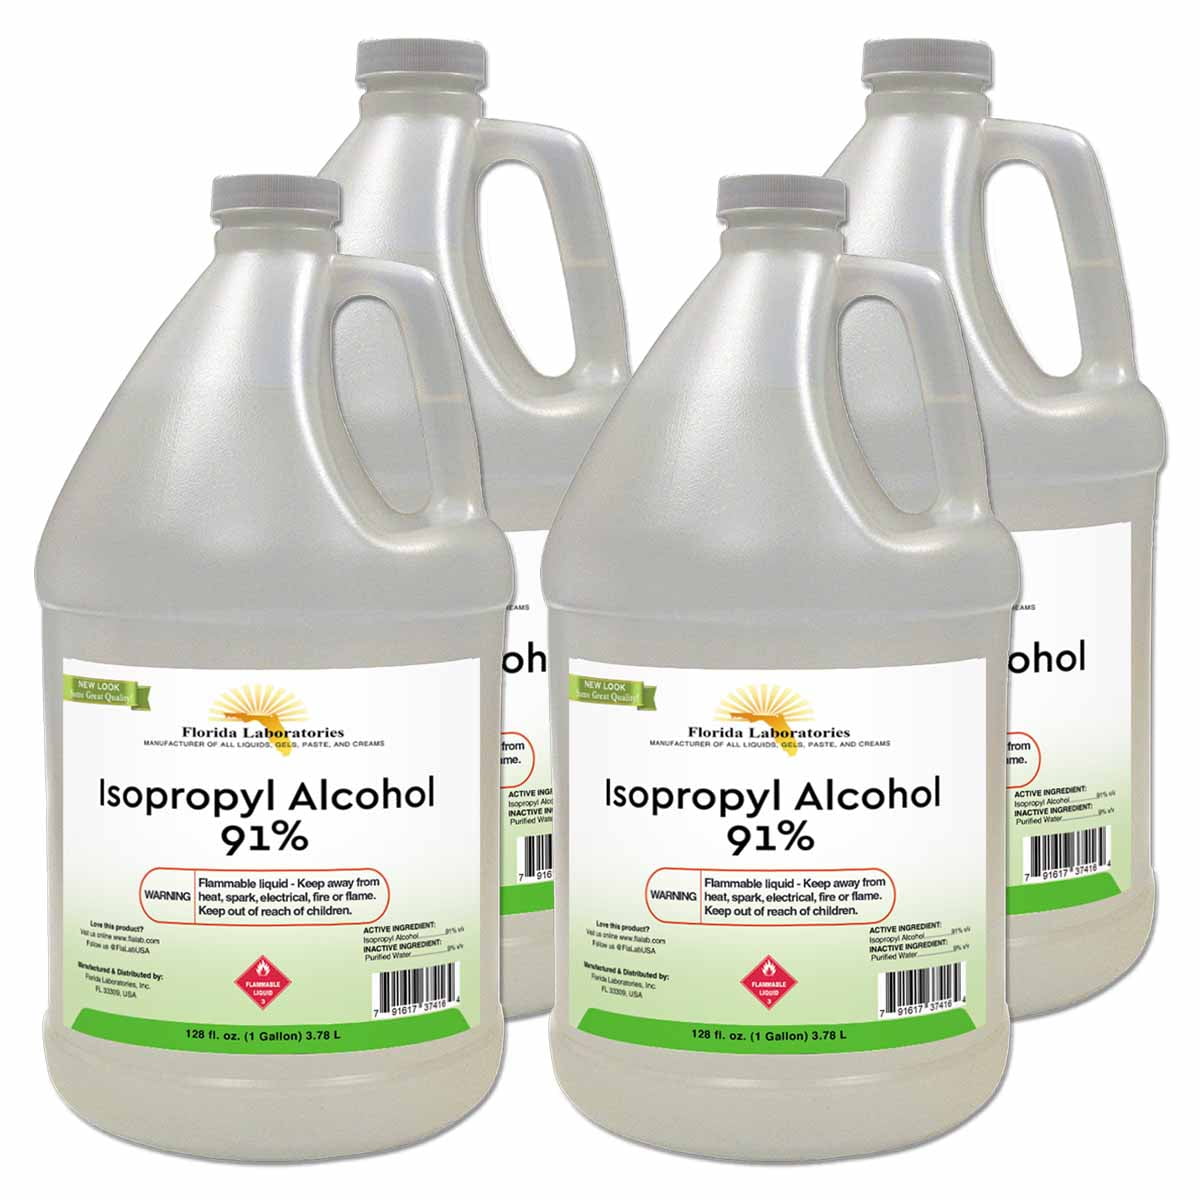 Isopropyl Alcohol 91%, 4-16 oz bottles